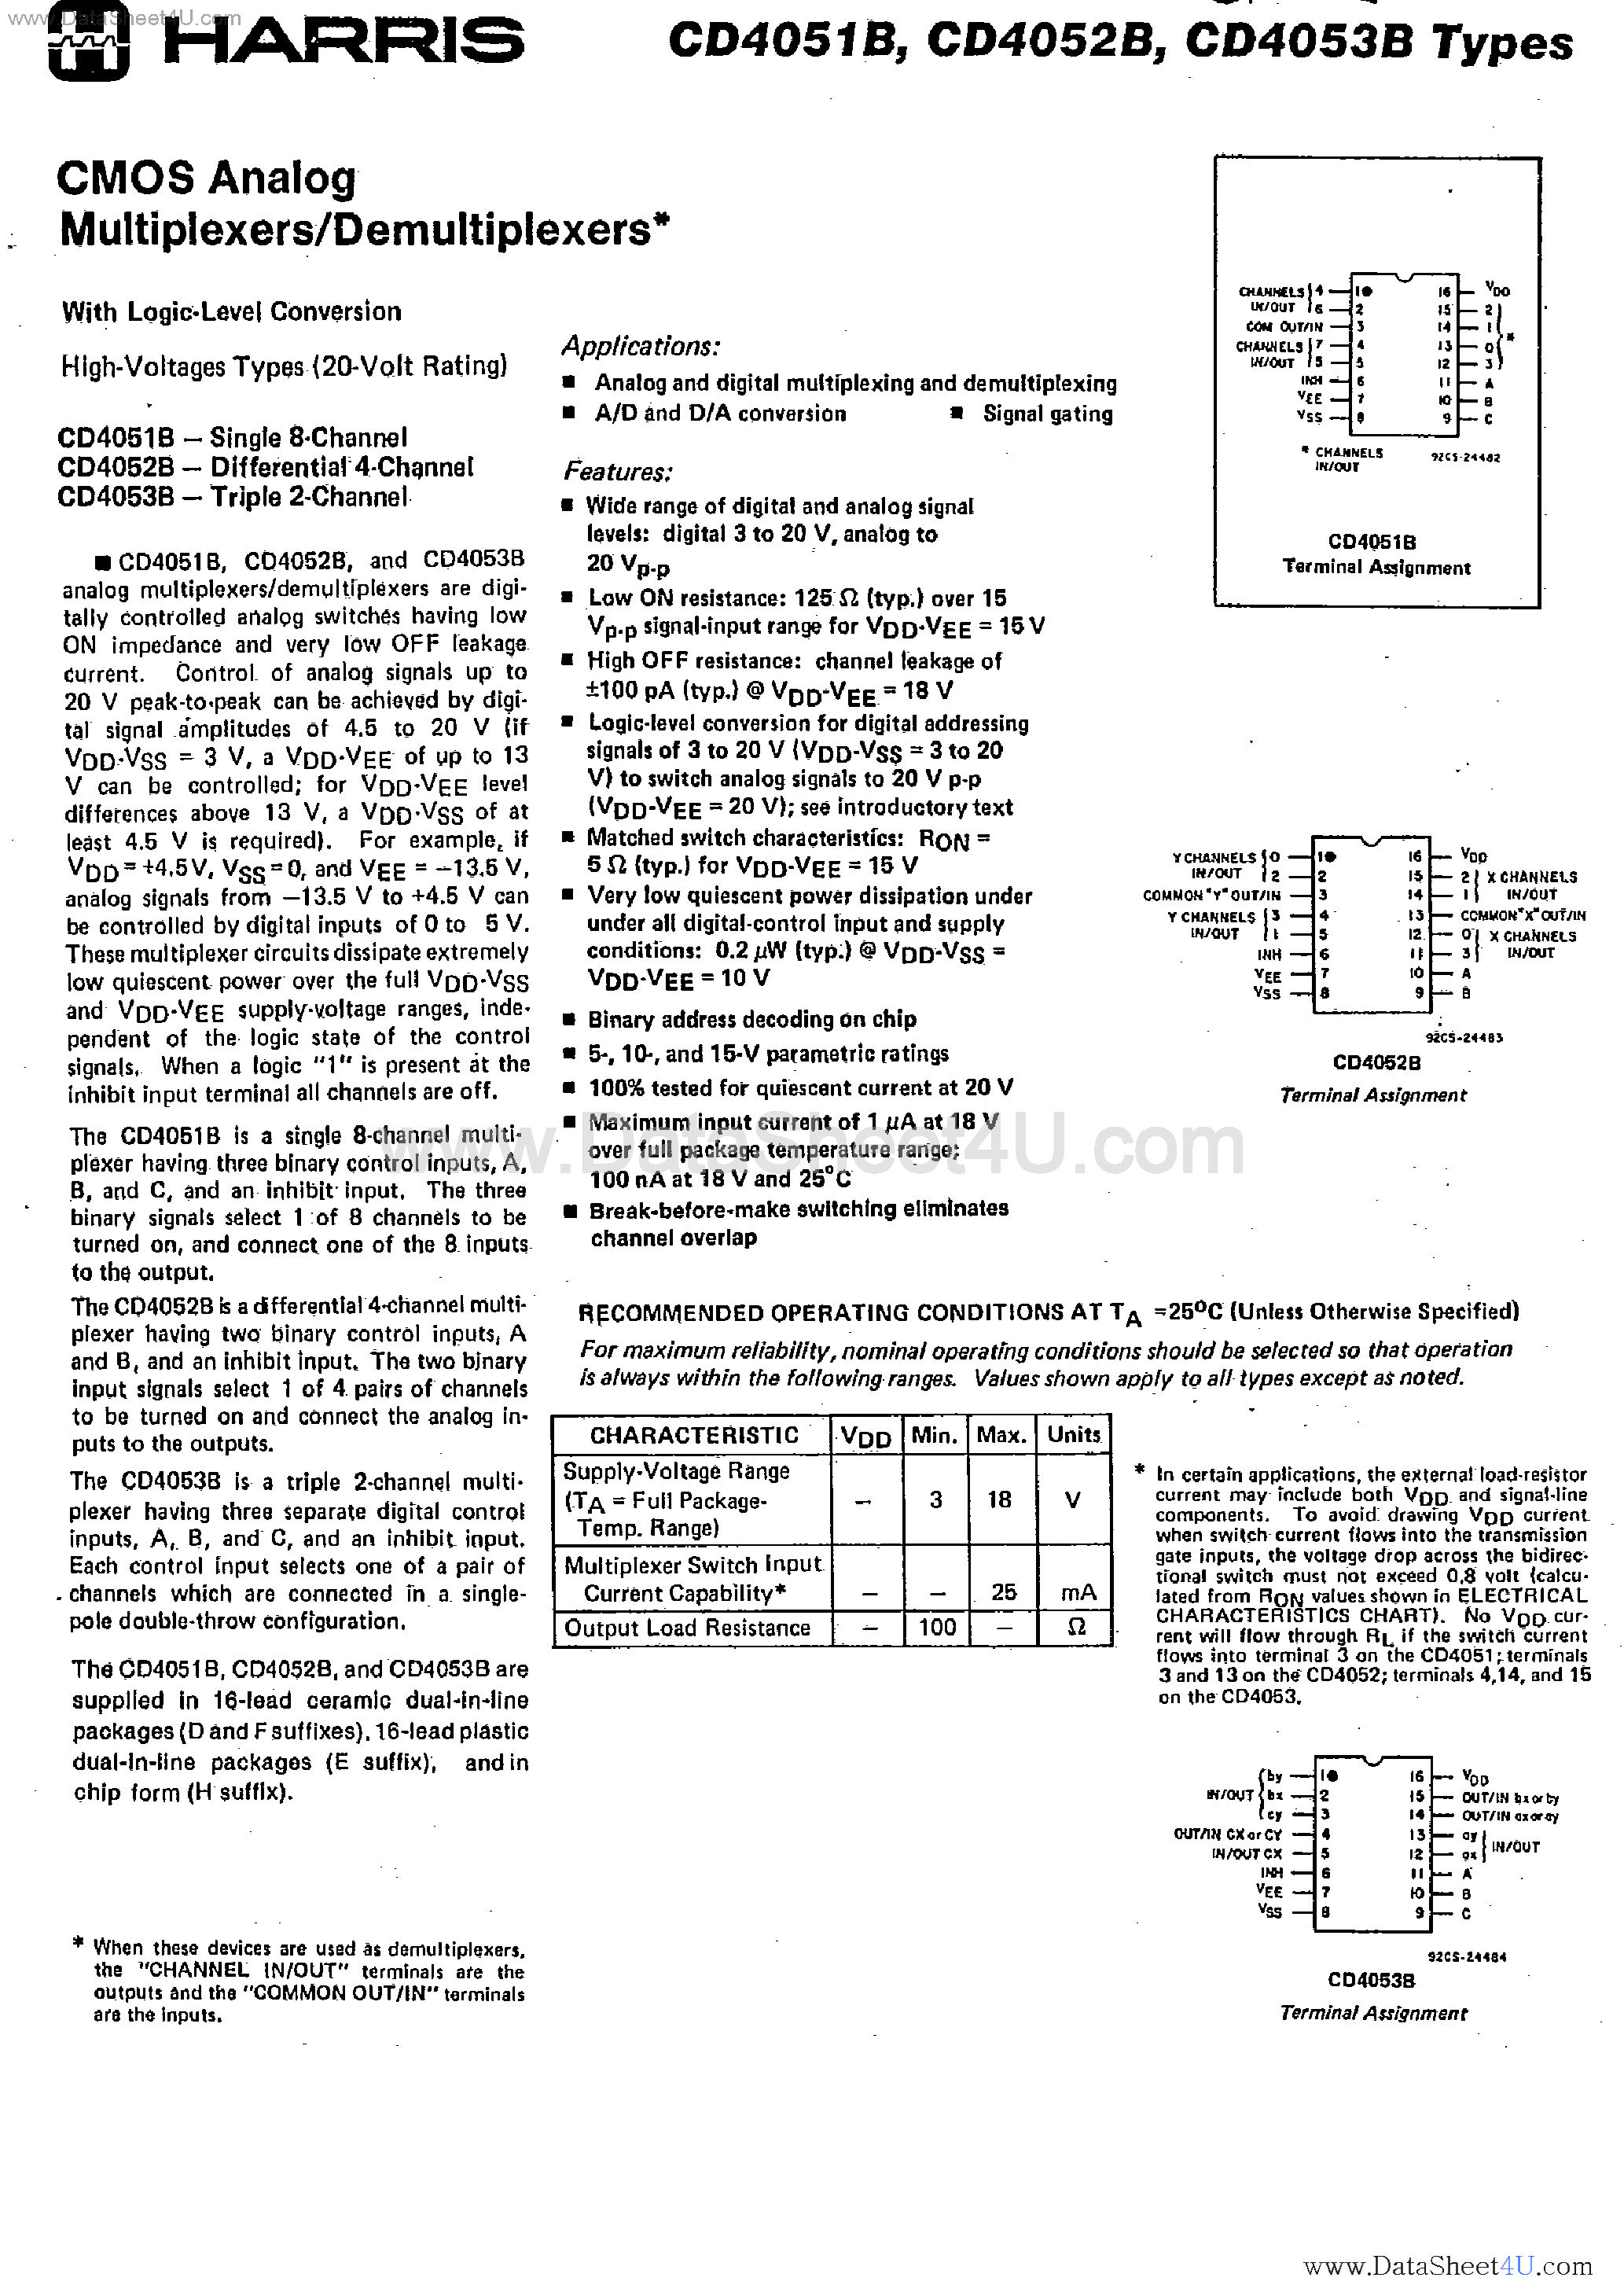 Даташит CD4051B - (CD4051BE - CD4053BE) CMOS Analog Multiplexers / Demultiplexers страница 1